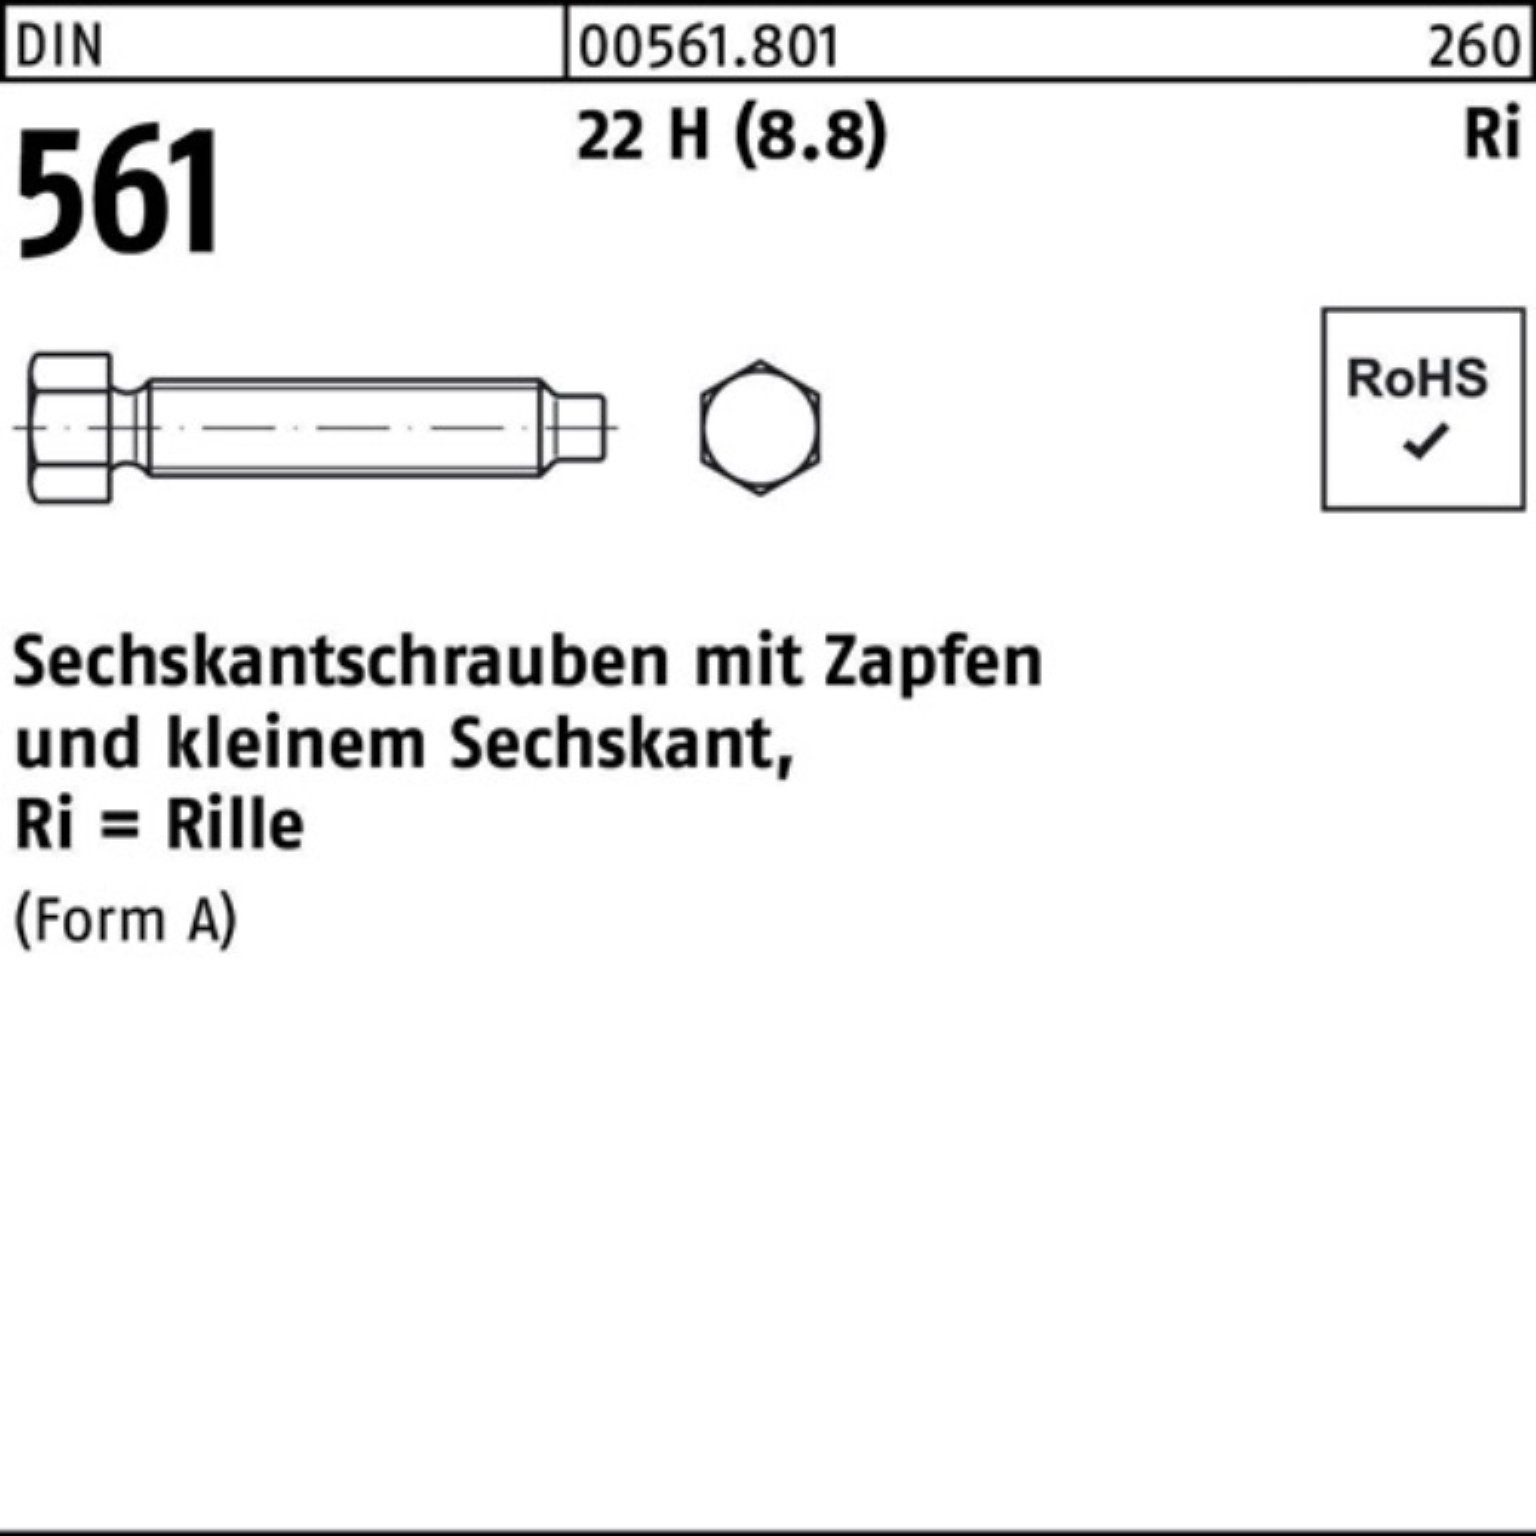 Pack Sechskantschraube Reyher 100er Sechskantschraube 16x (8.8) St Zapfen AM H 22 35 561 25 DIN